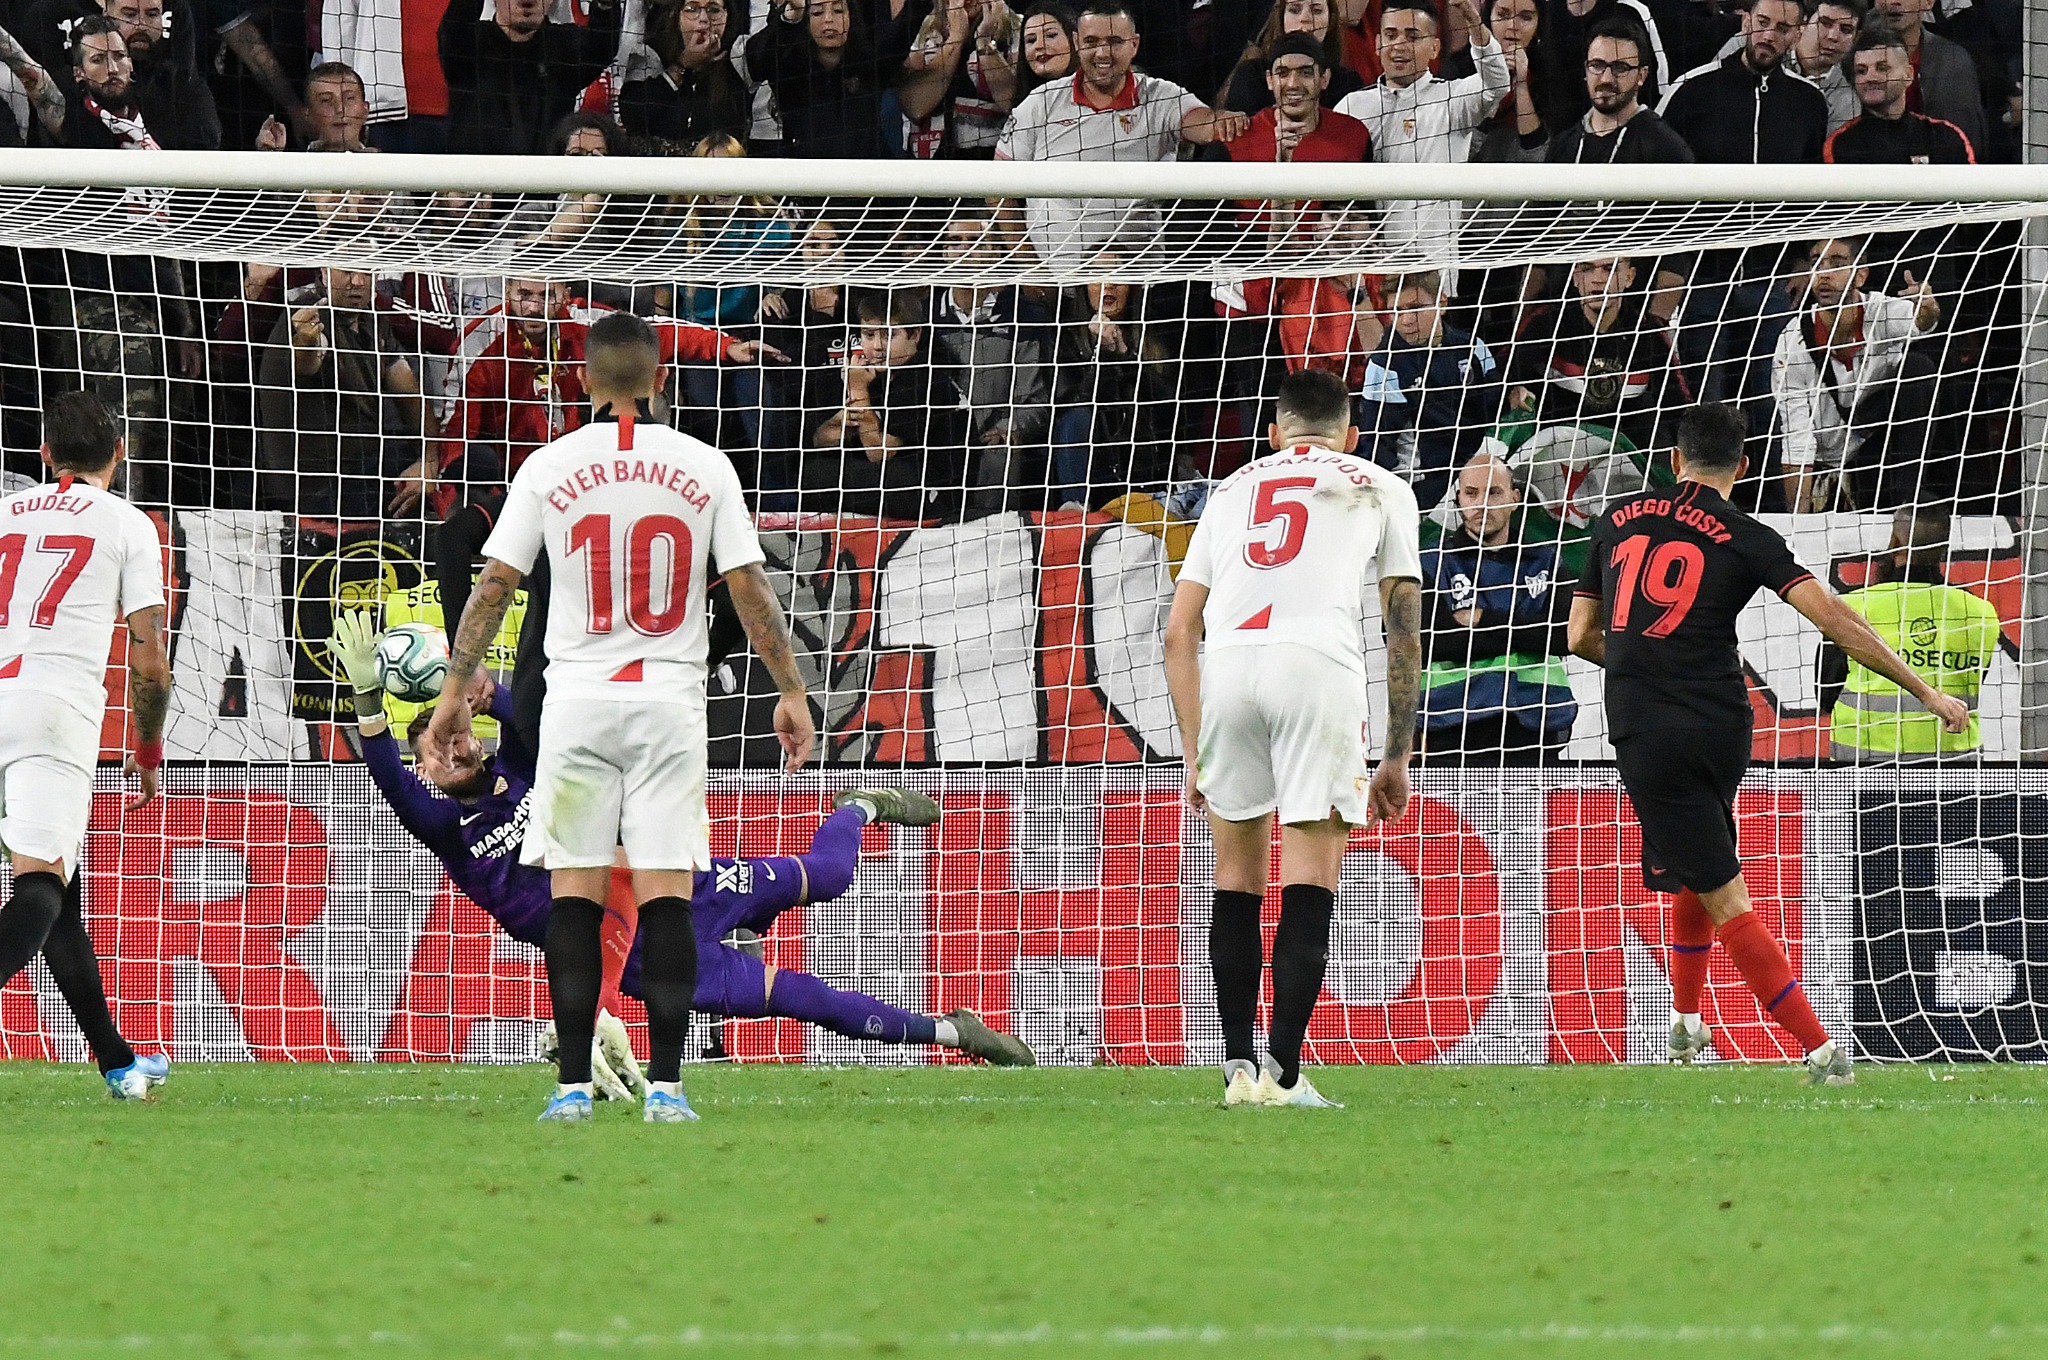 Vaclík saves Diego Costa's penalty